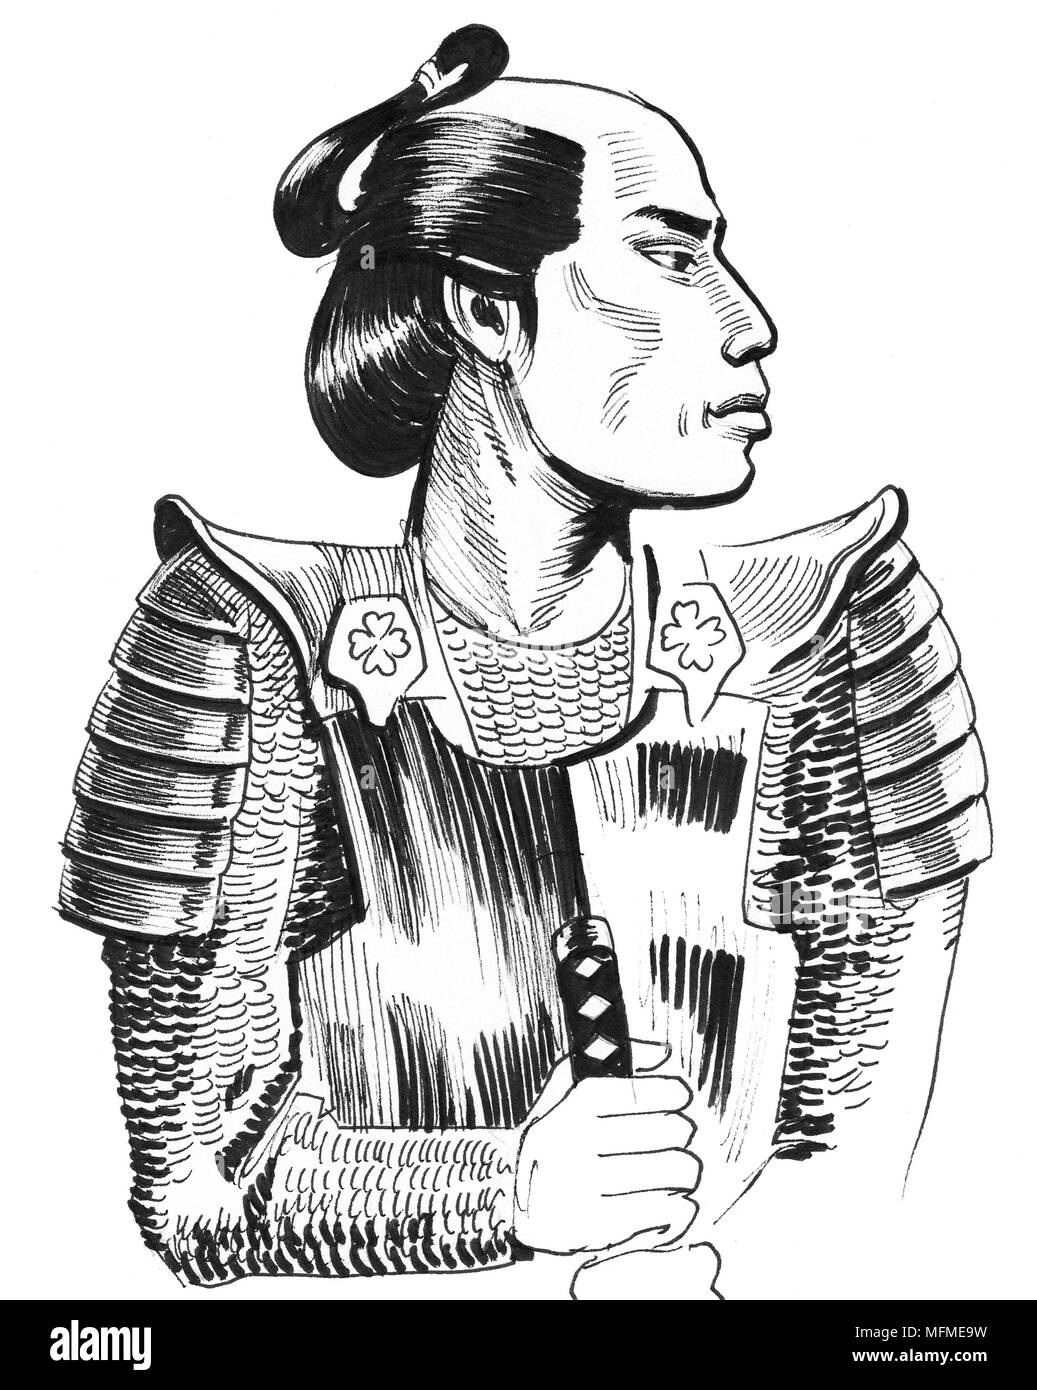 Samurai warrior. Ink black and white illustration Stock Photo